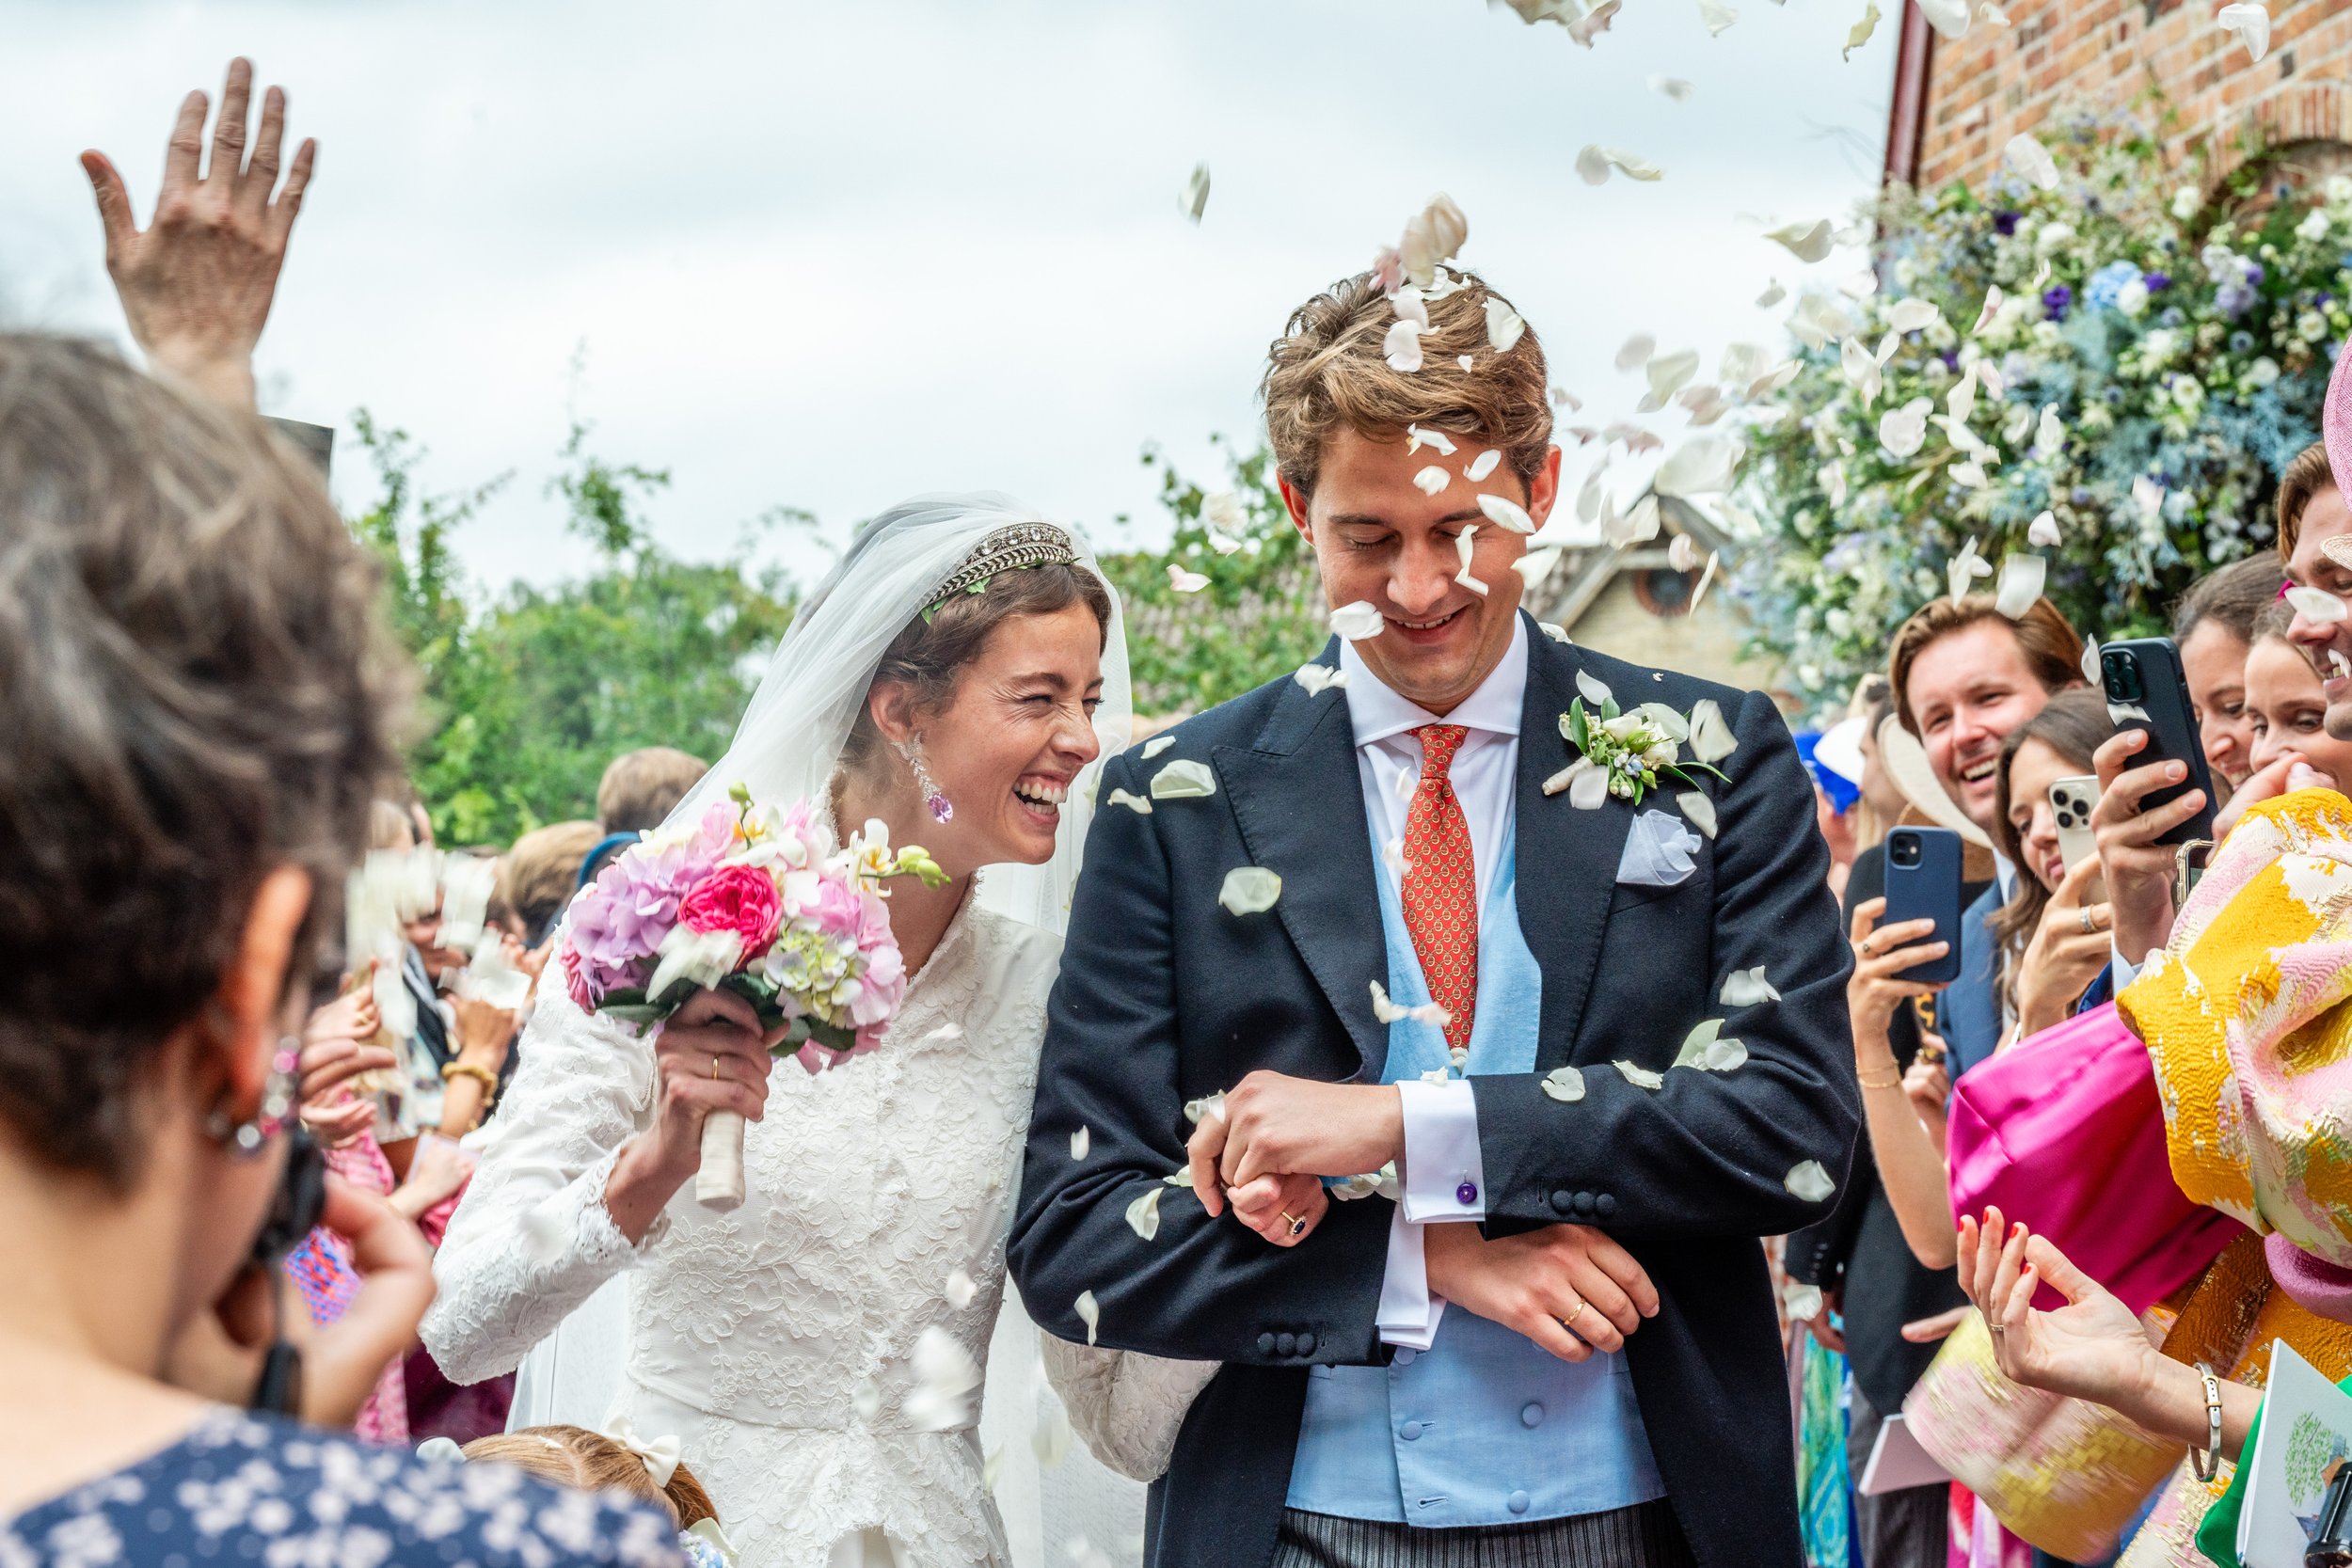 The wedding of Jebsen, assignment for JydskeVestkysten